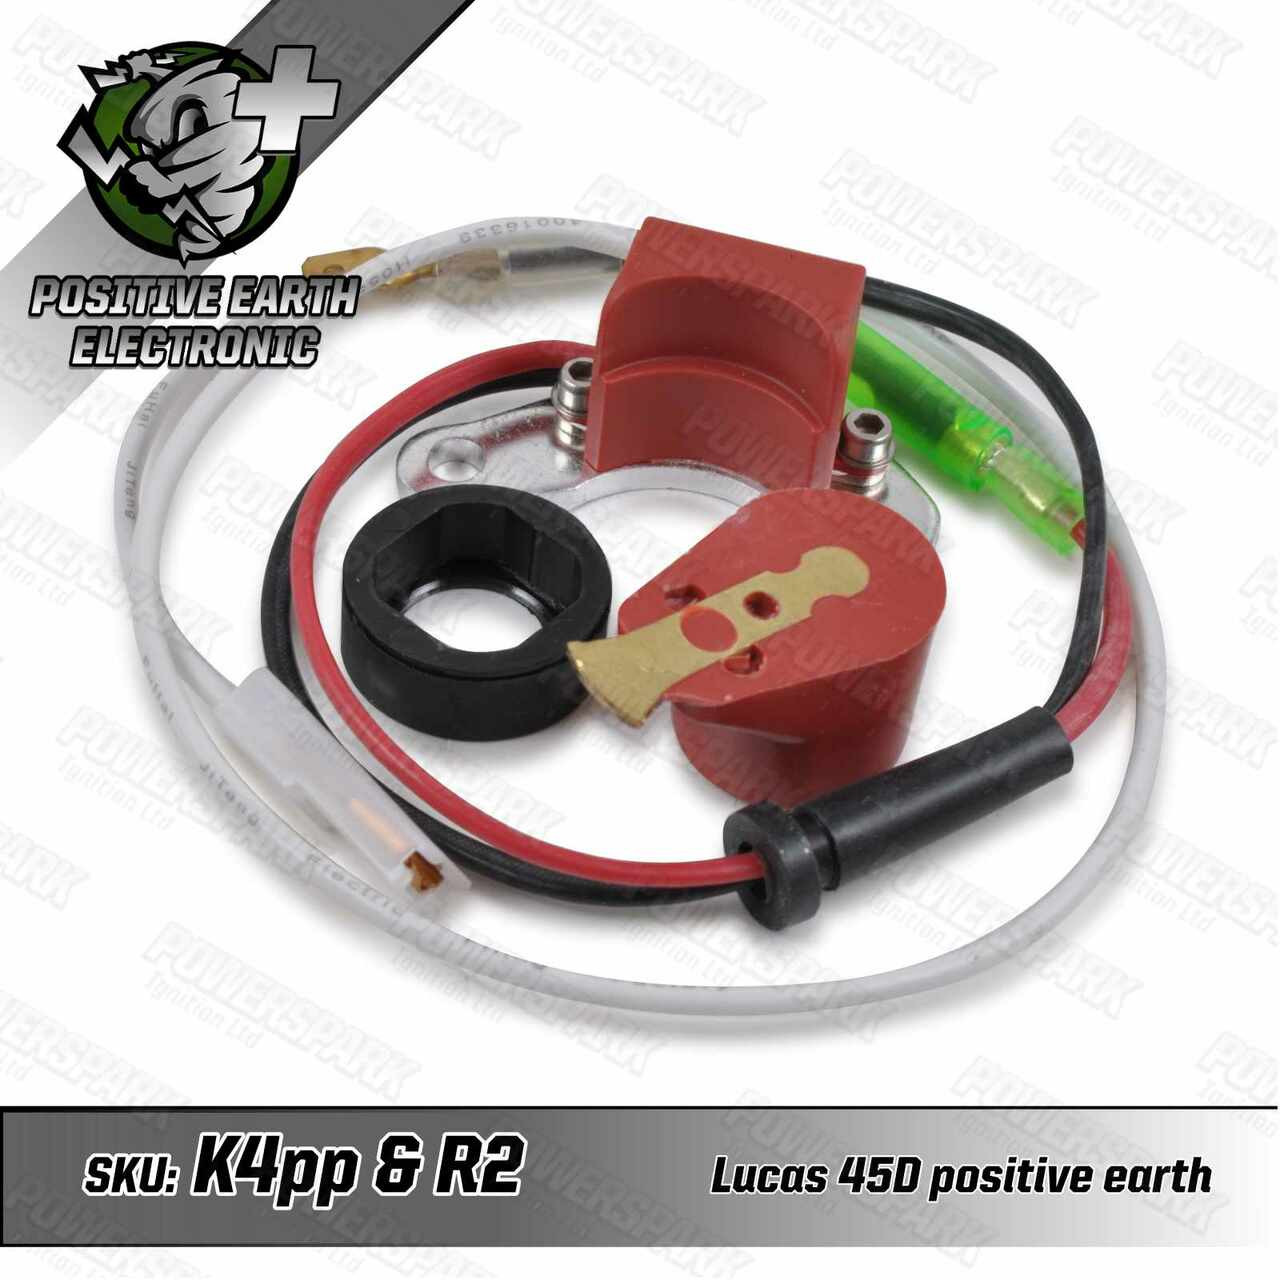 Powerspark Electronic Ignition Kit for Lucas 45D, 43D, 59D Distributor Positive Earth K4PP & R2